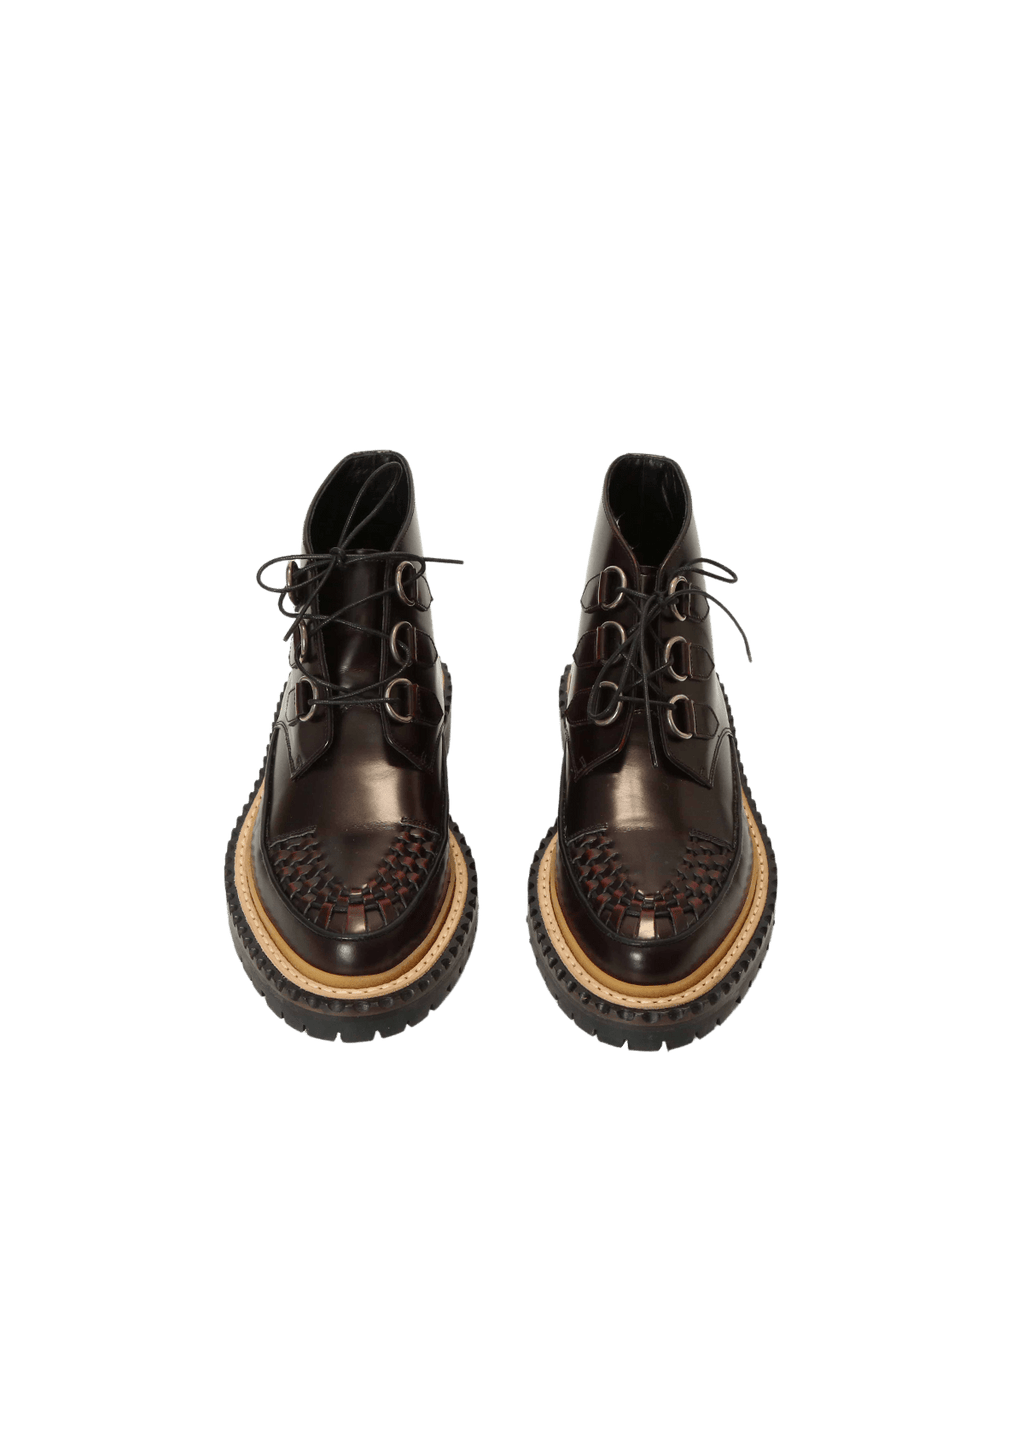 Bota Burberry Leather Combat Boots Marrom Original – Gringa